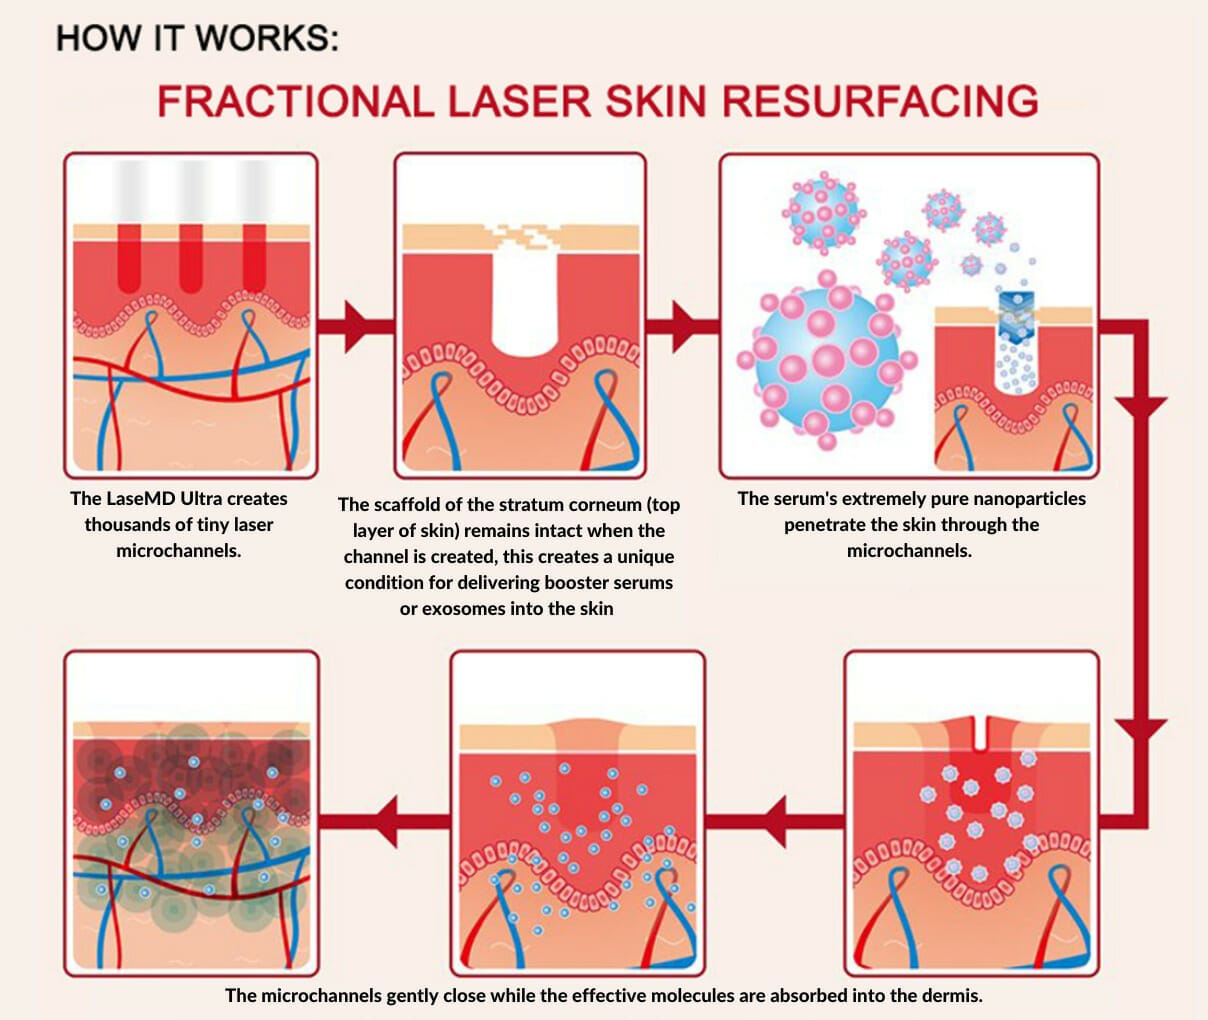 Fractional Laser Skin Resurfacing, how it works